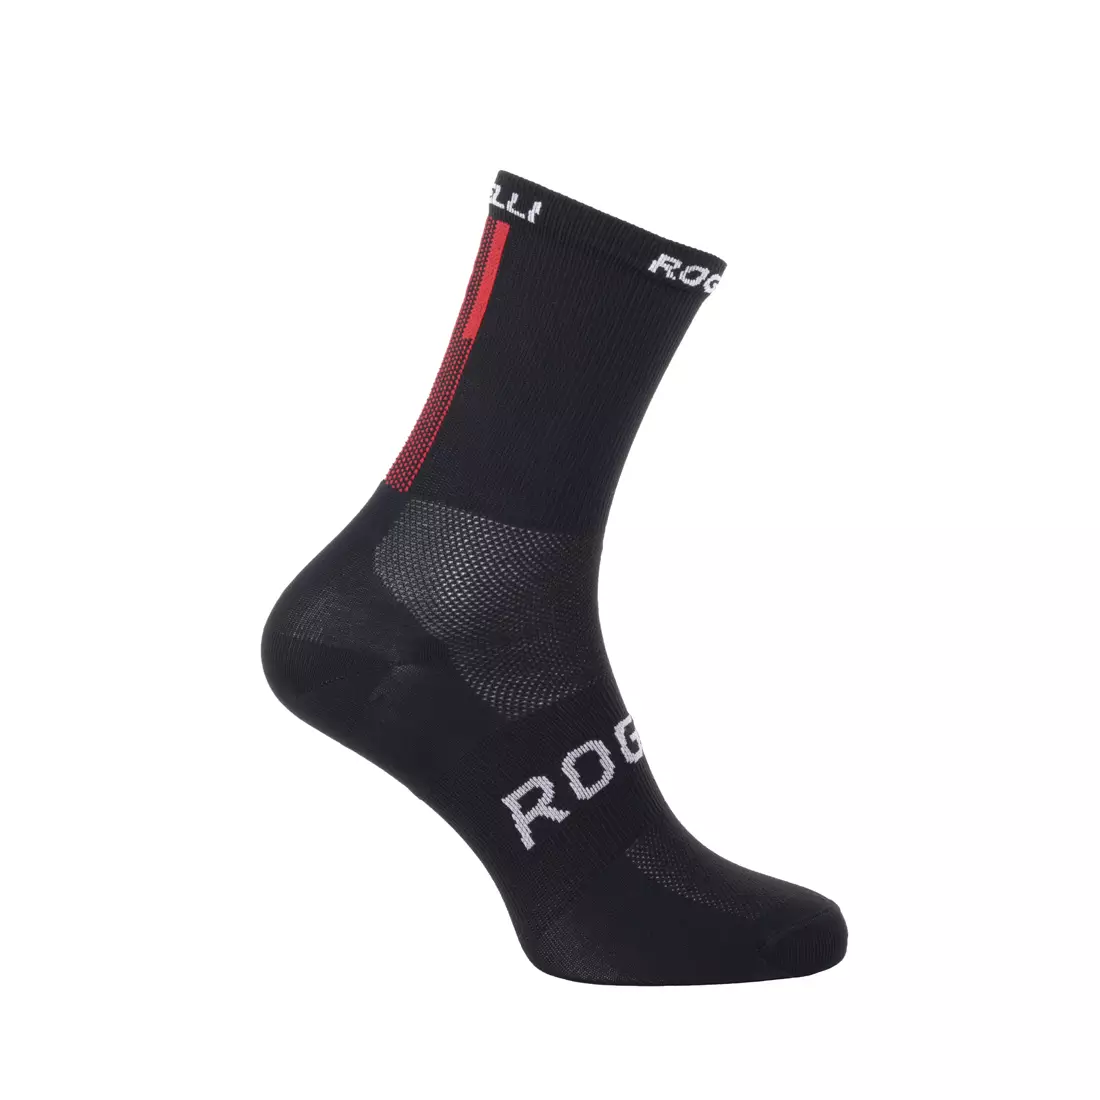 ROGELLI TEAM 2.0 cycling sports socks, black